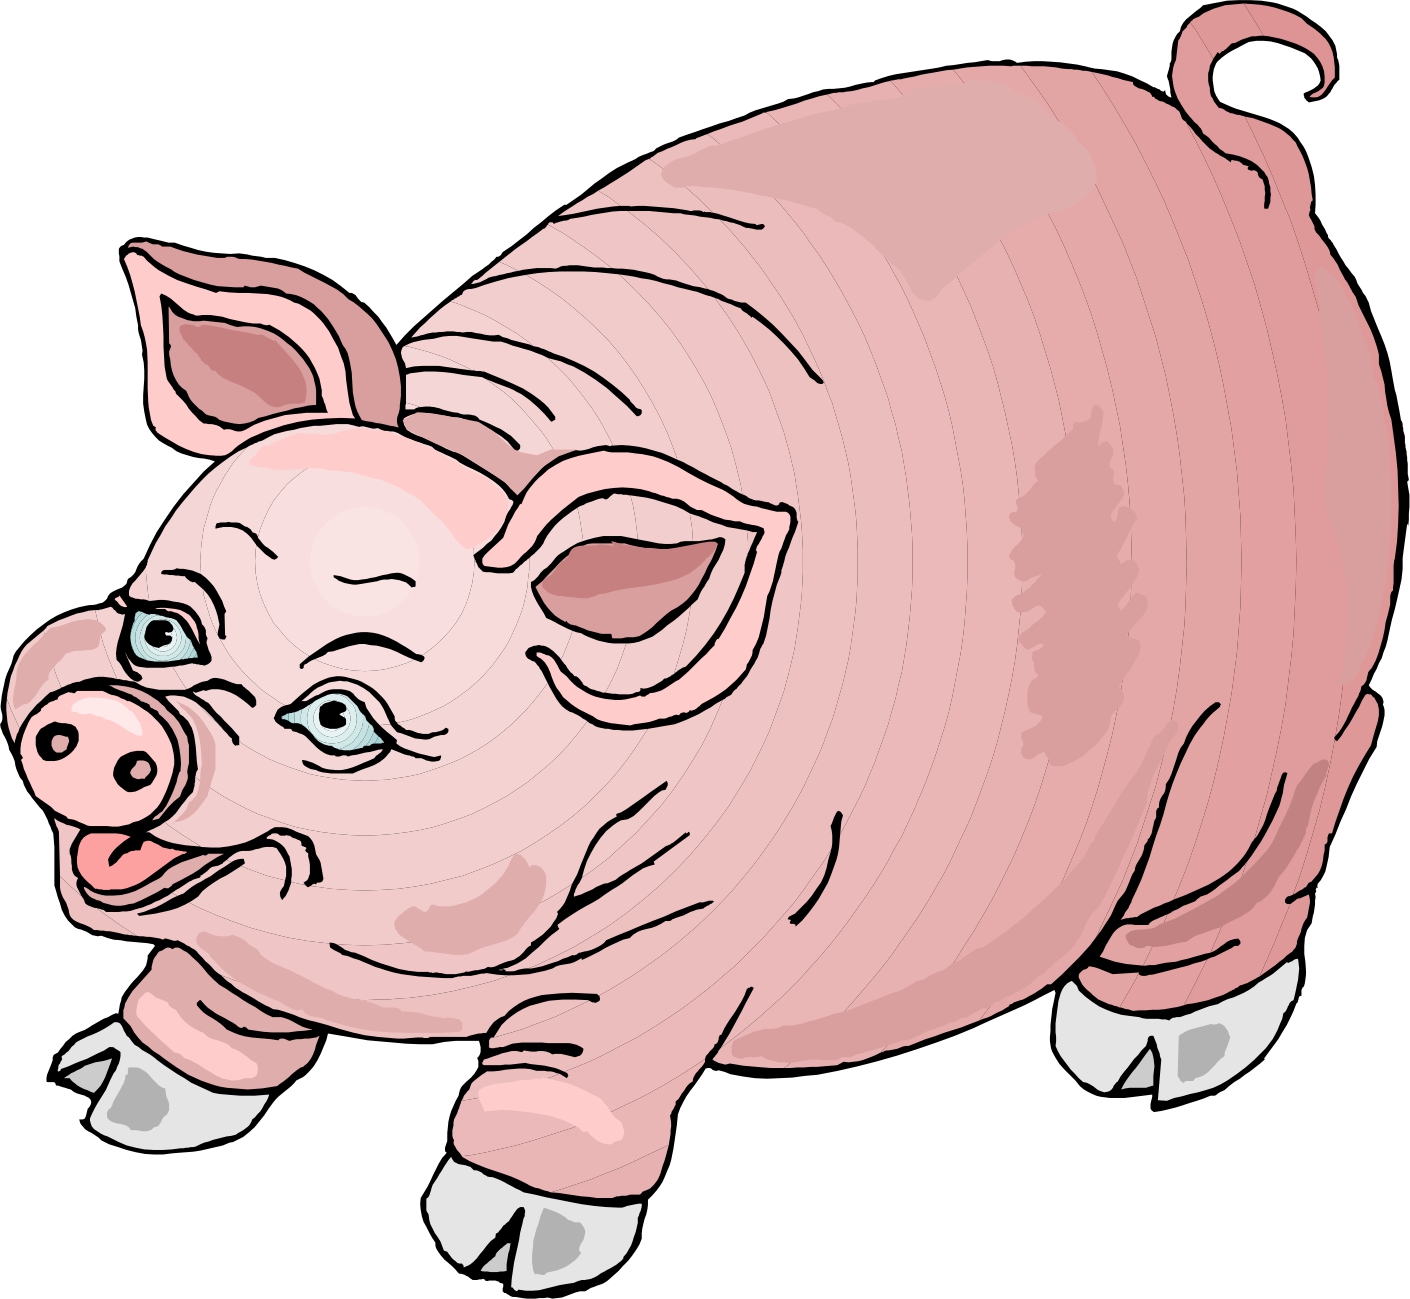 3 Pig Cartoon - Clipart library